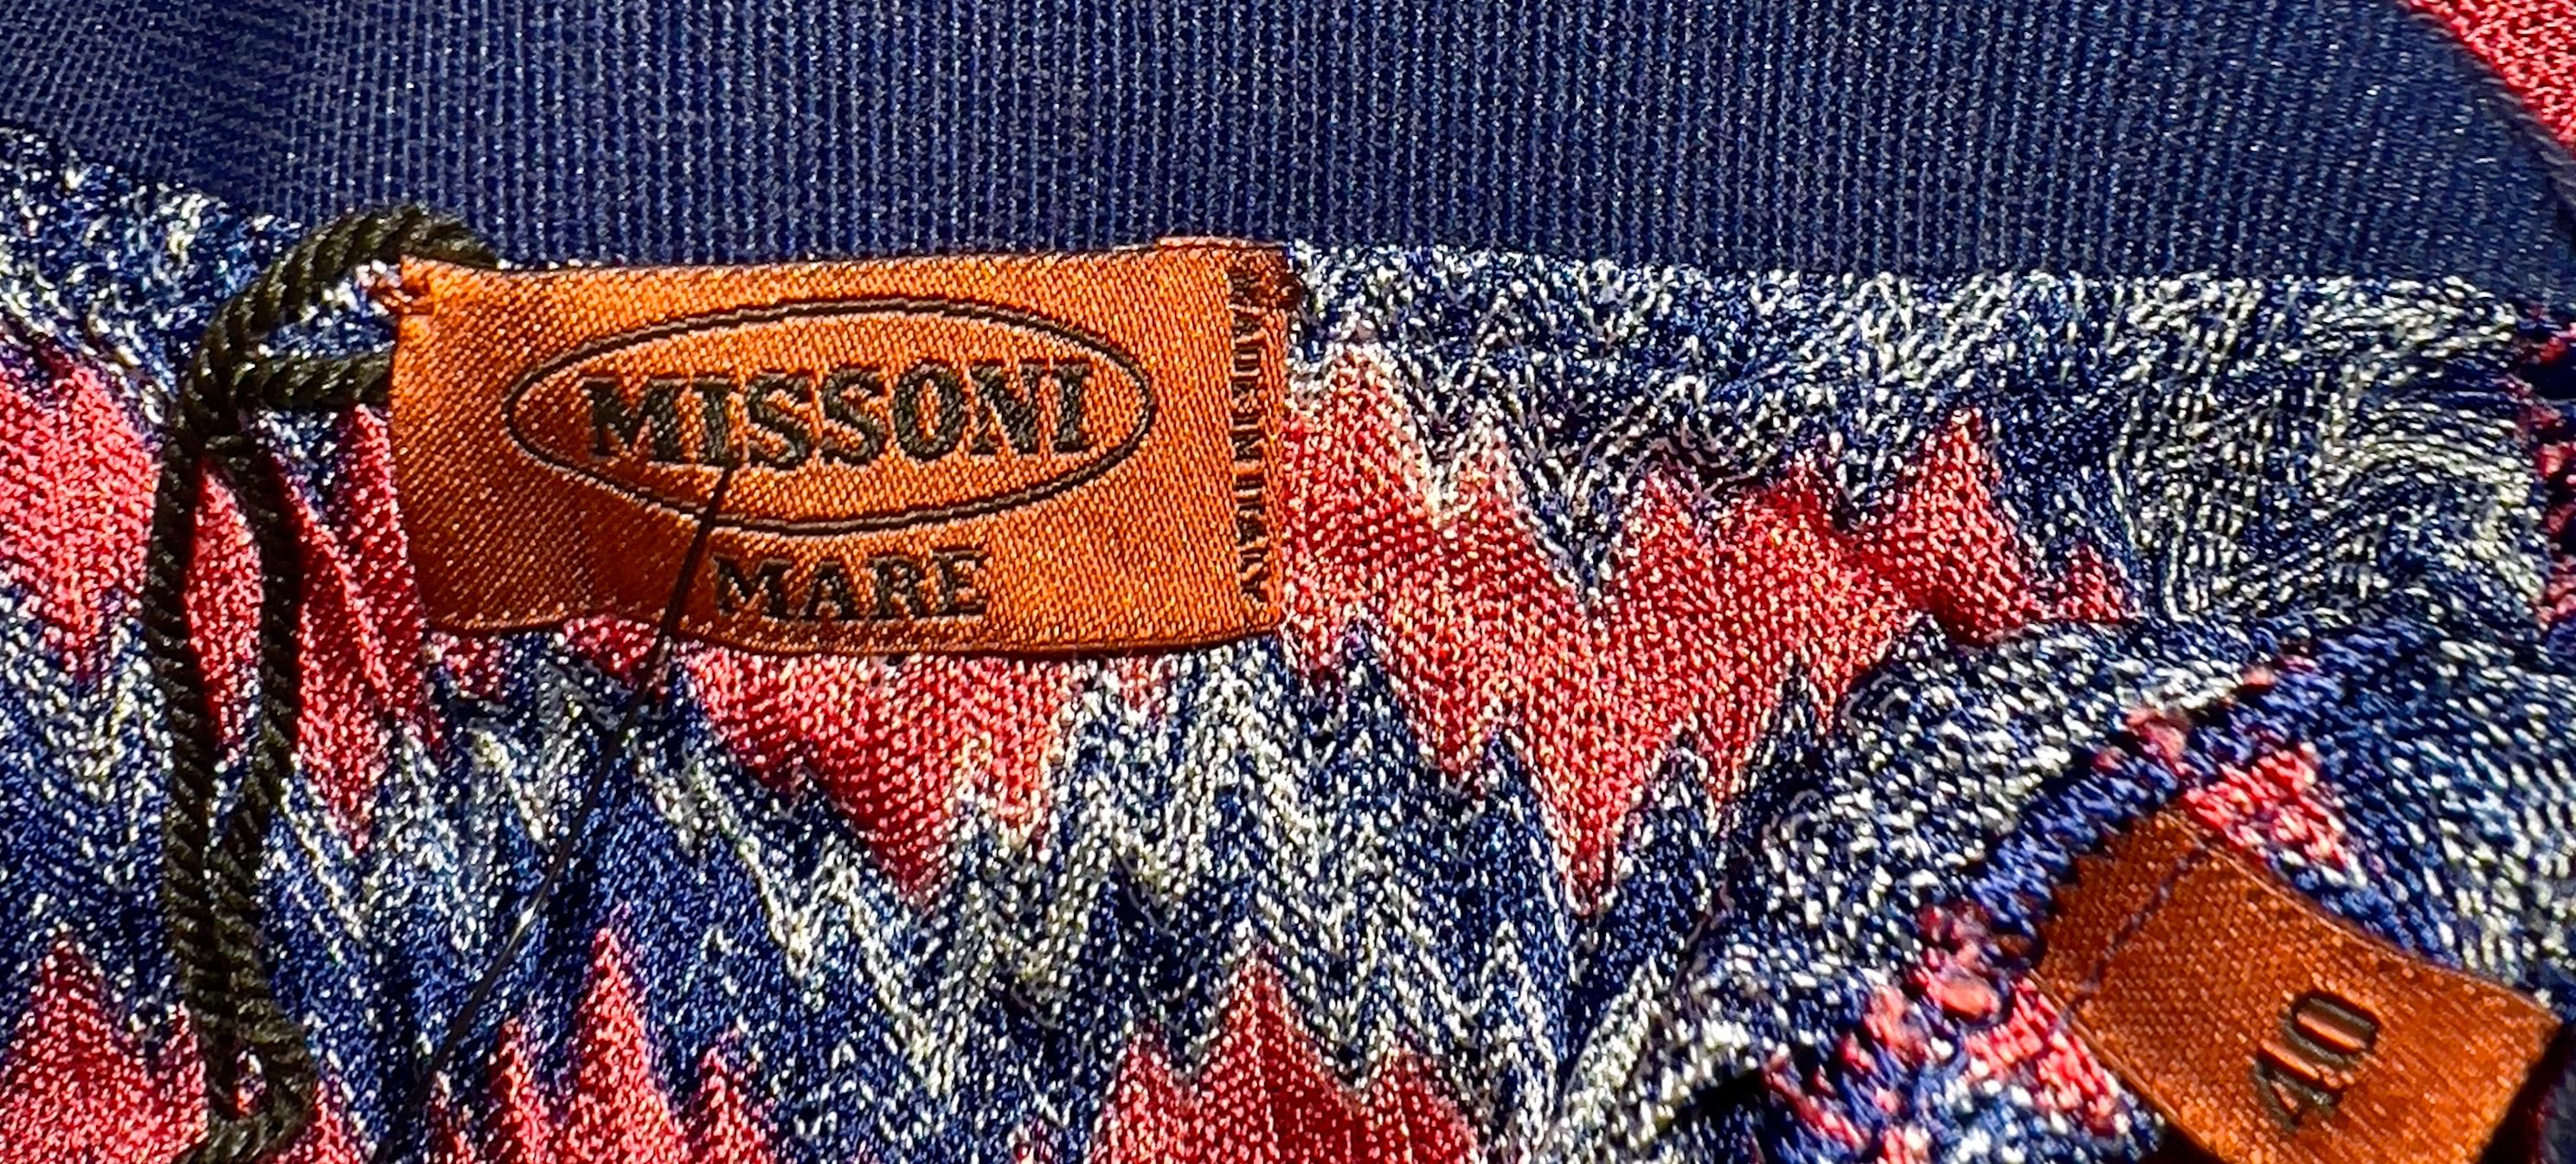 NEW Missoni Signature Chevron Crochet Knit Kaftan Tunic Cover Up Top Dress 40 For Sale 4